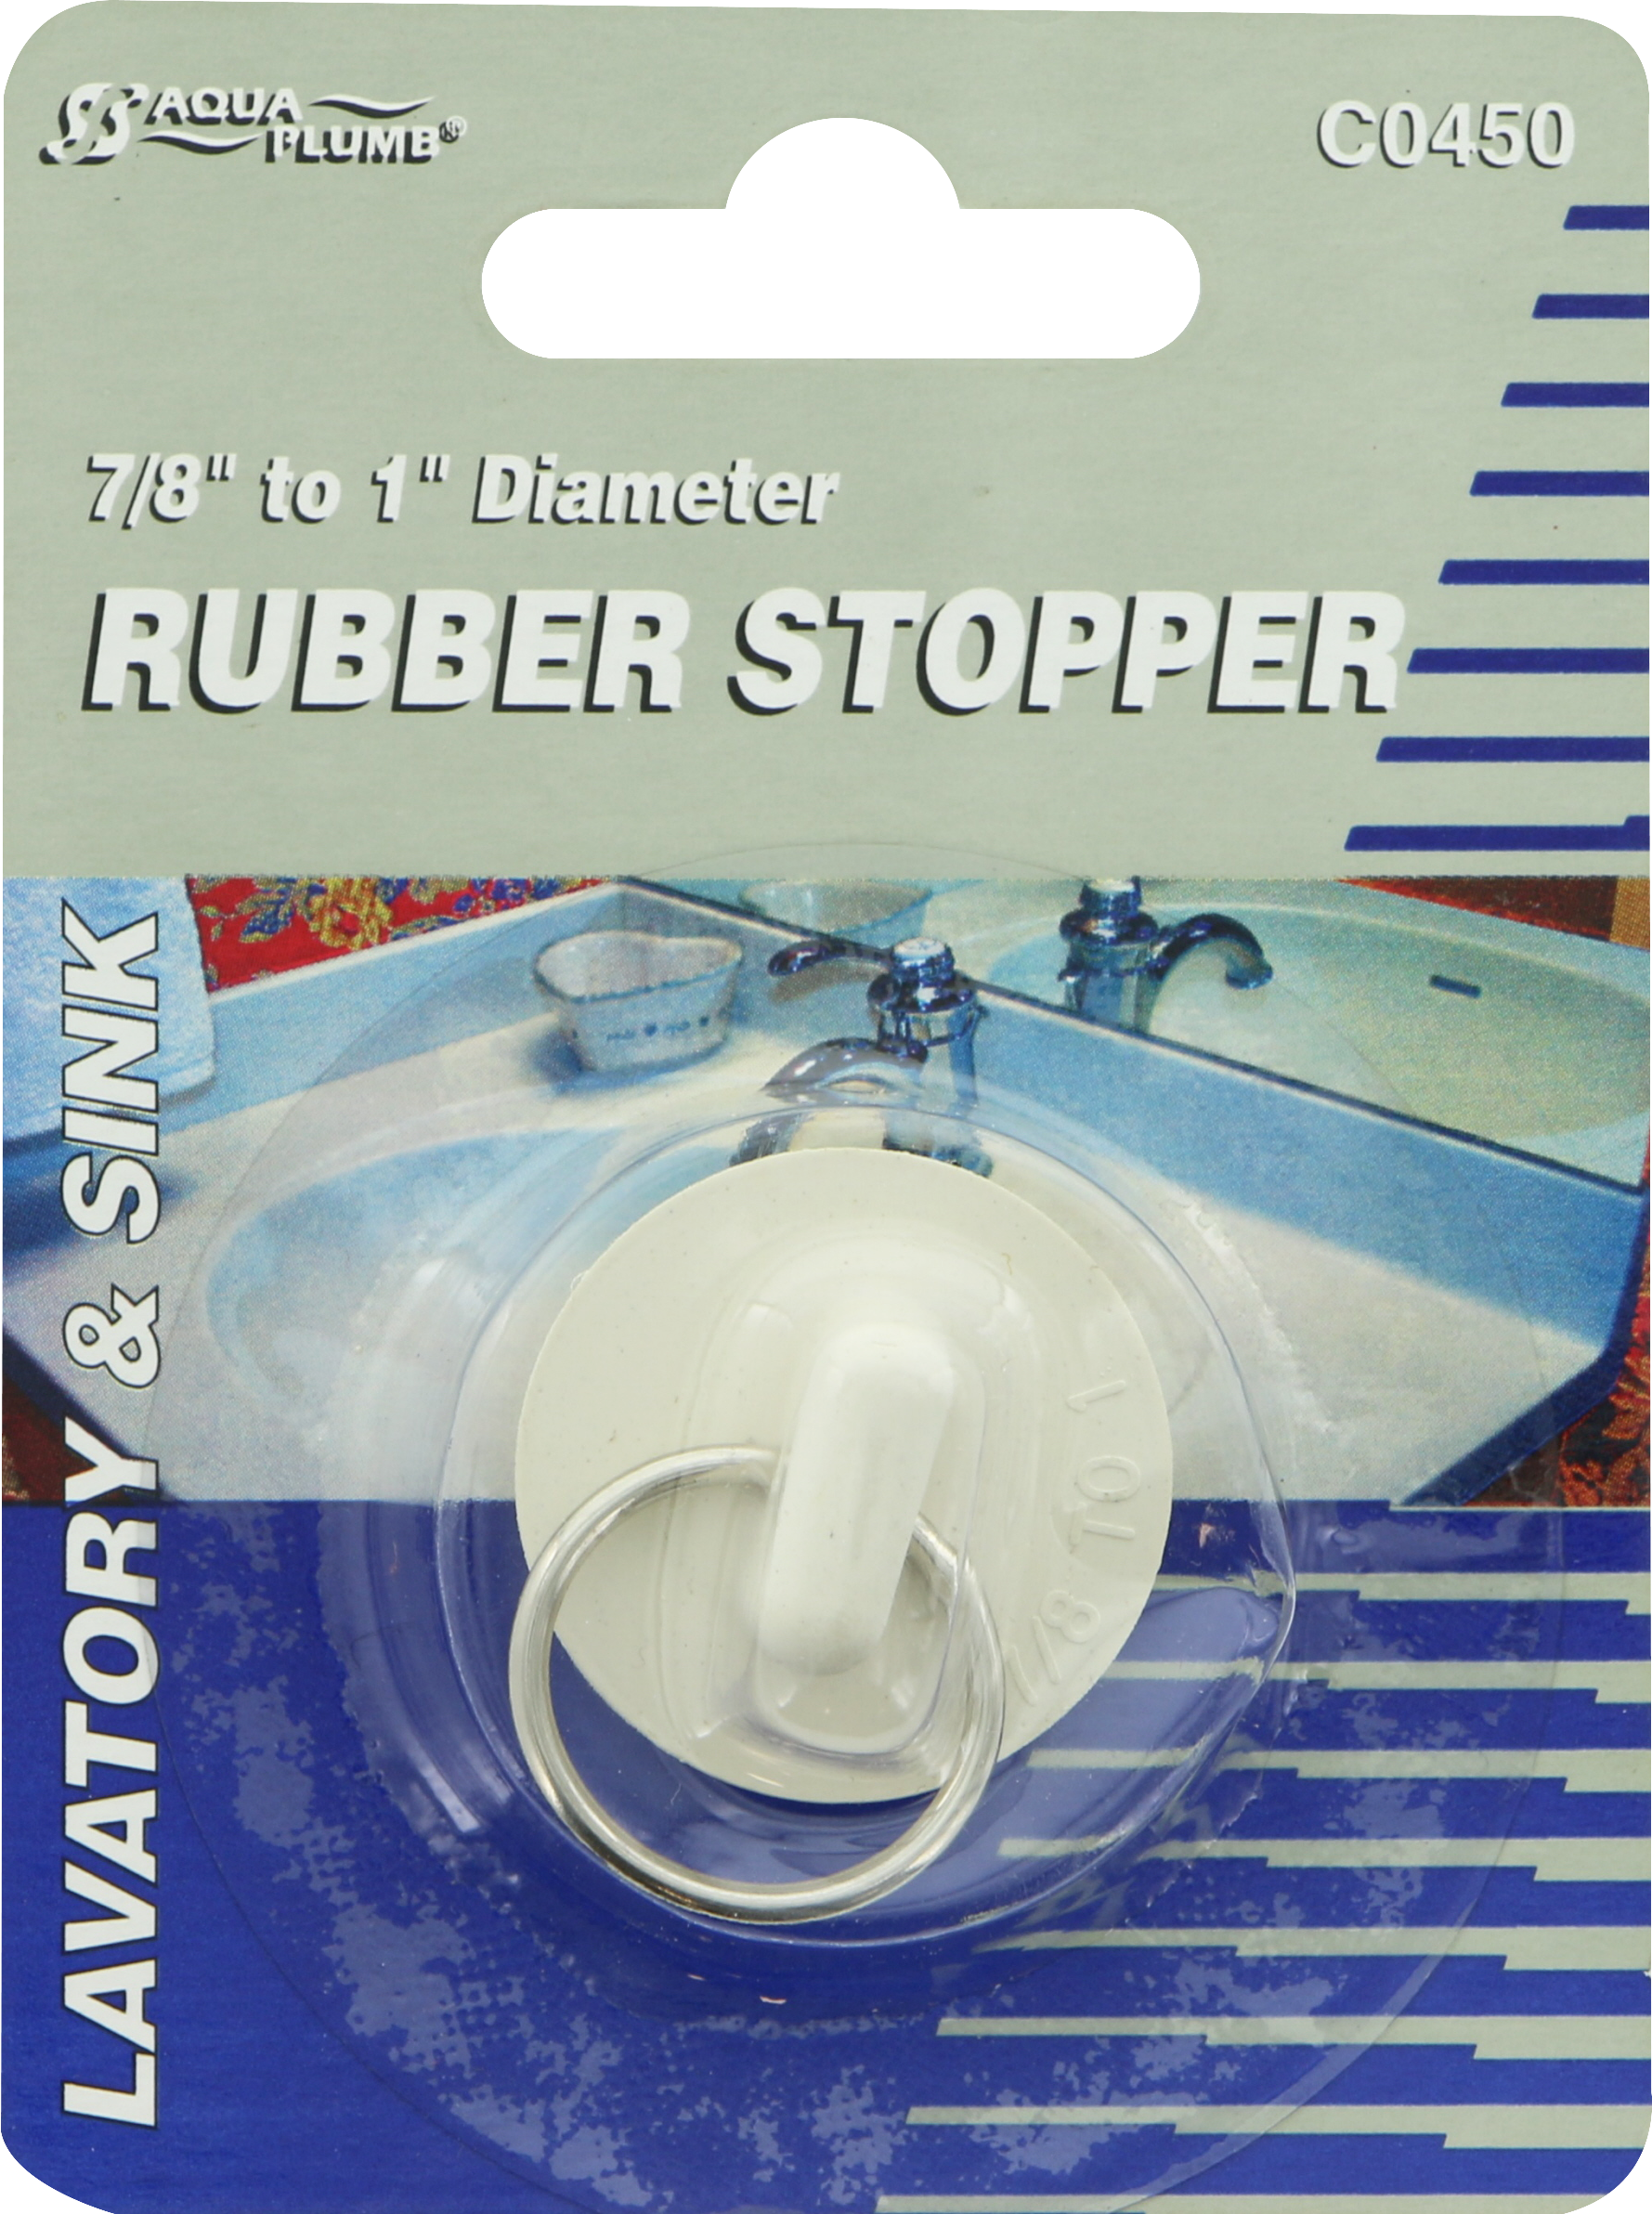 2-Pack Sink Tub Drain Stopper White Rubber 7/8" to 1" Diameter Aqua Plumb C0450 